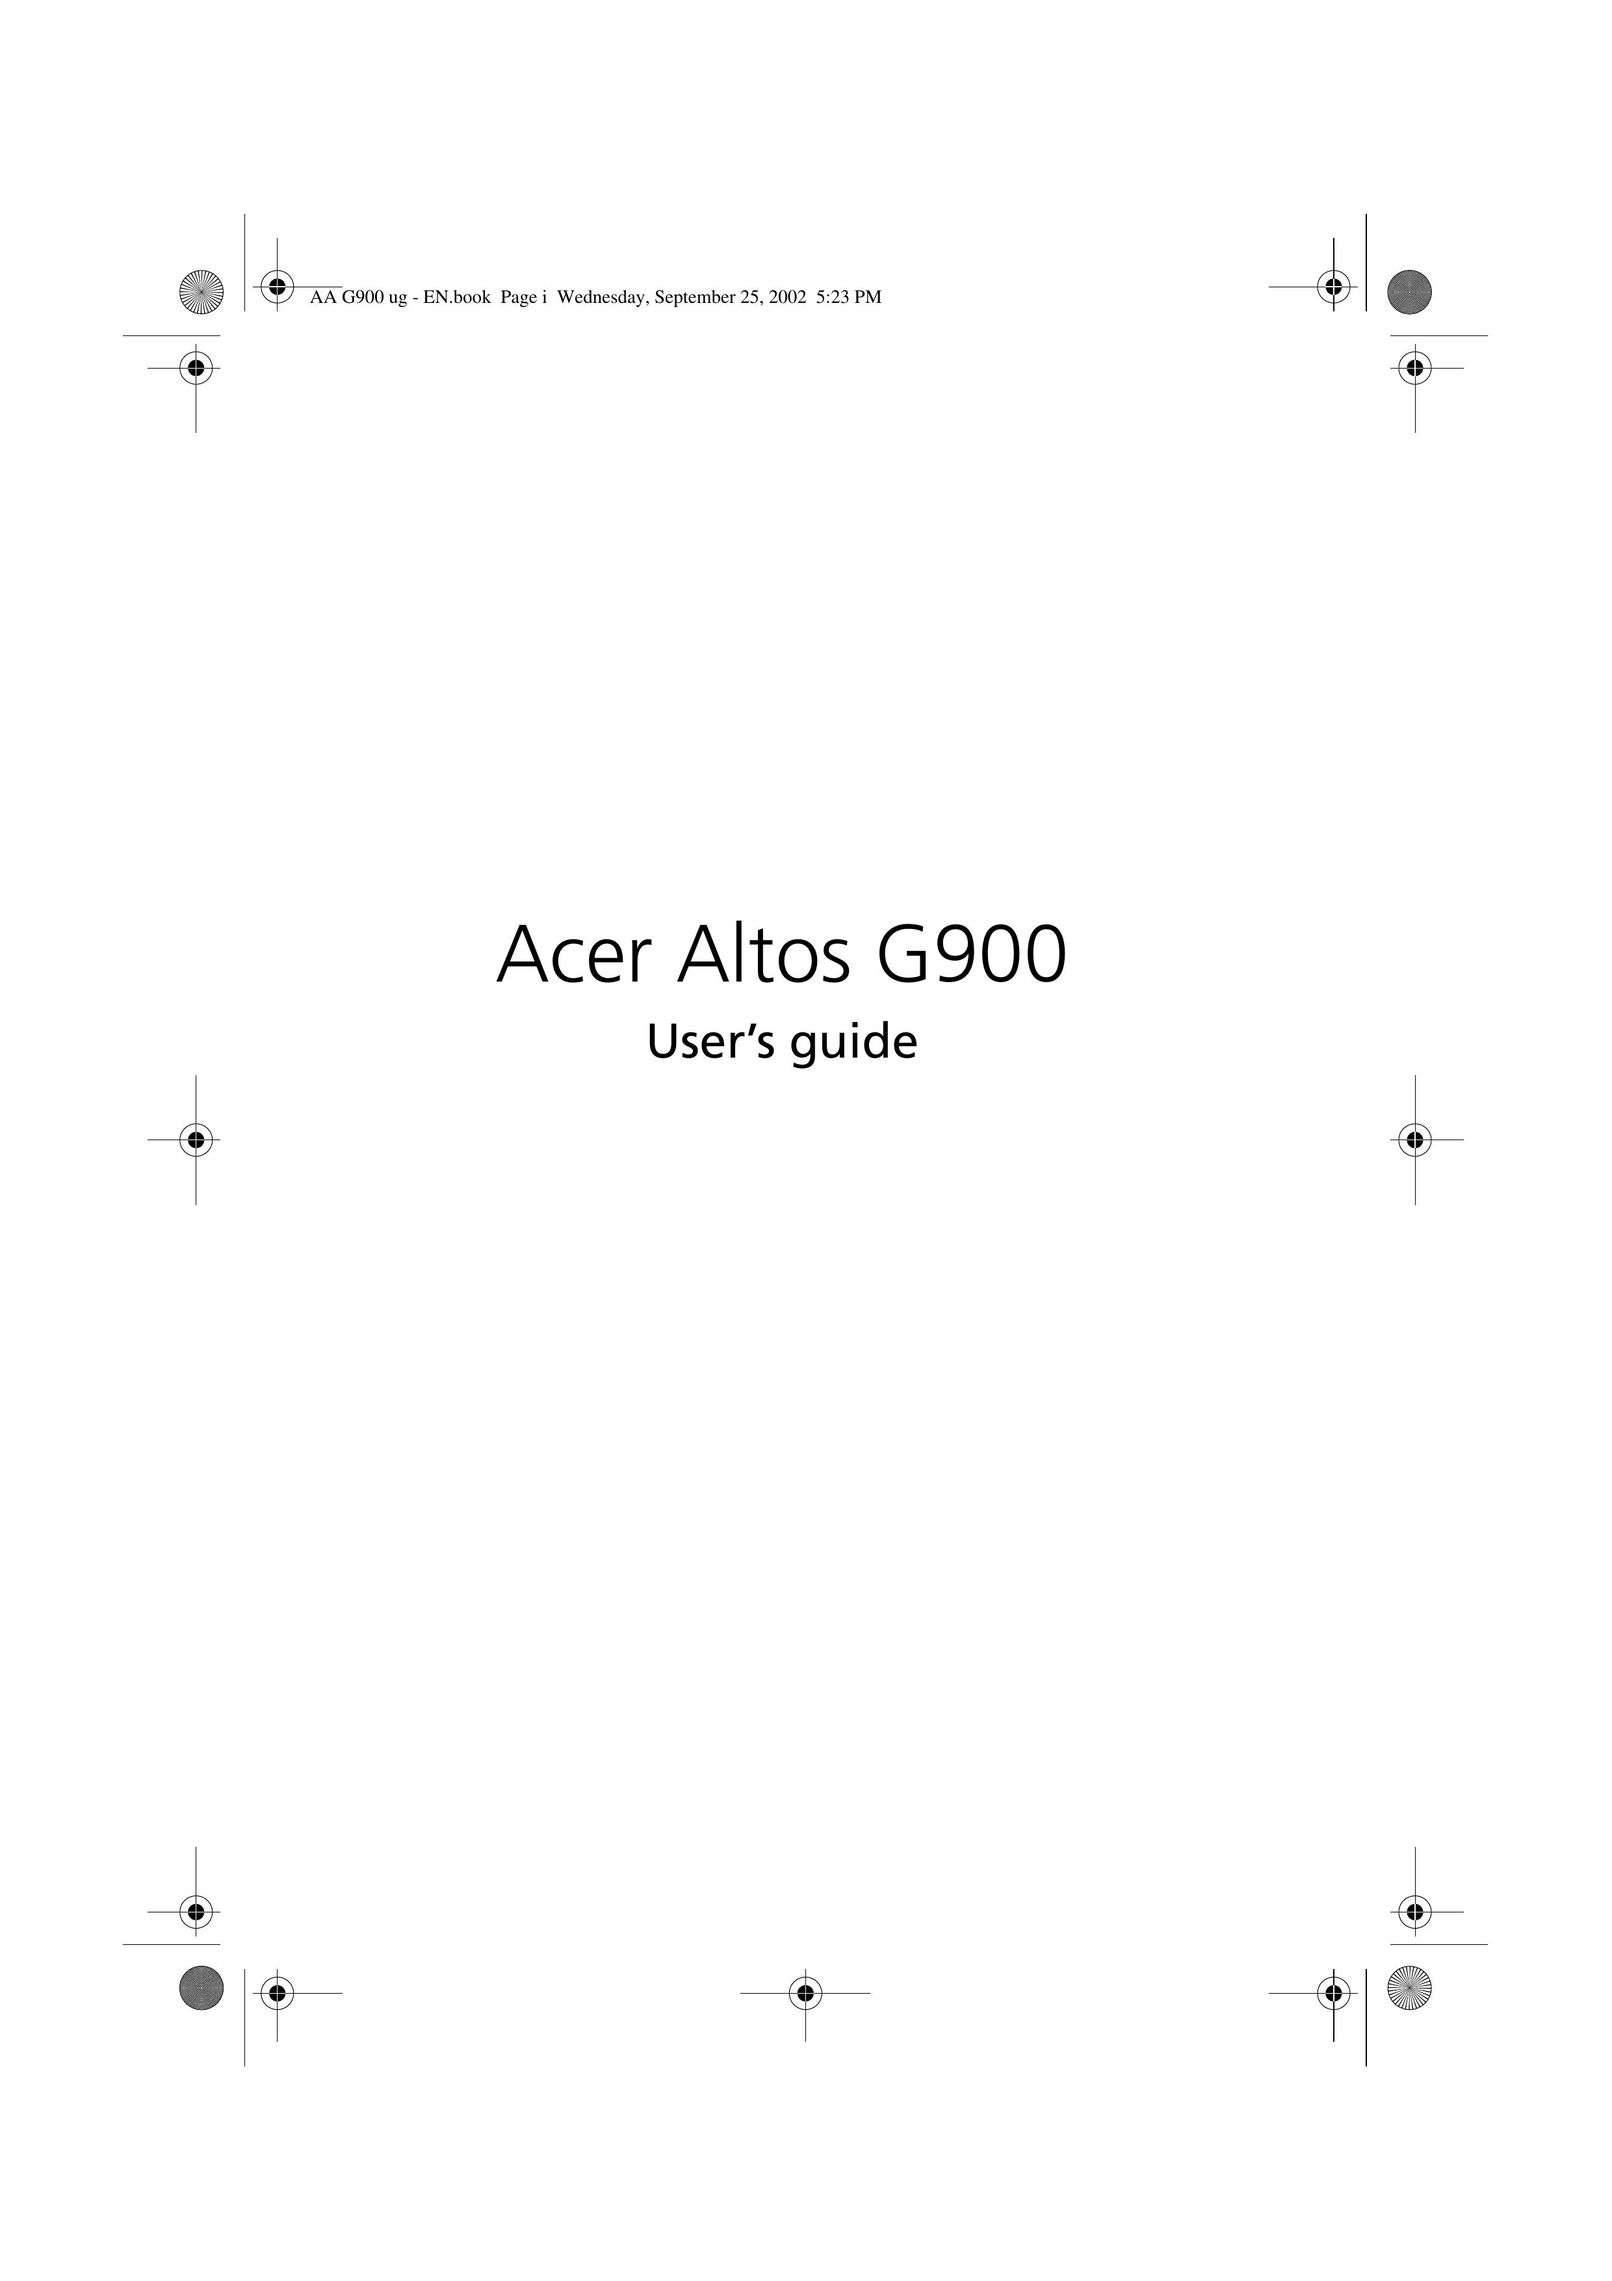 Acer Altos G900 Personal Computer User Manual